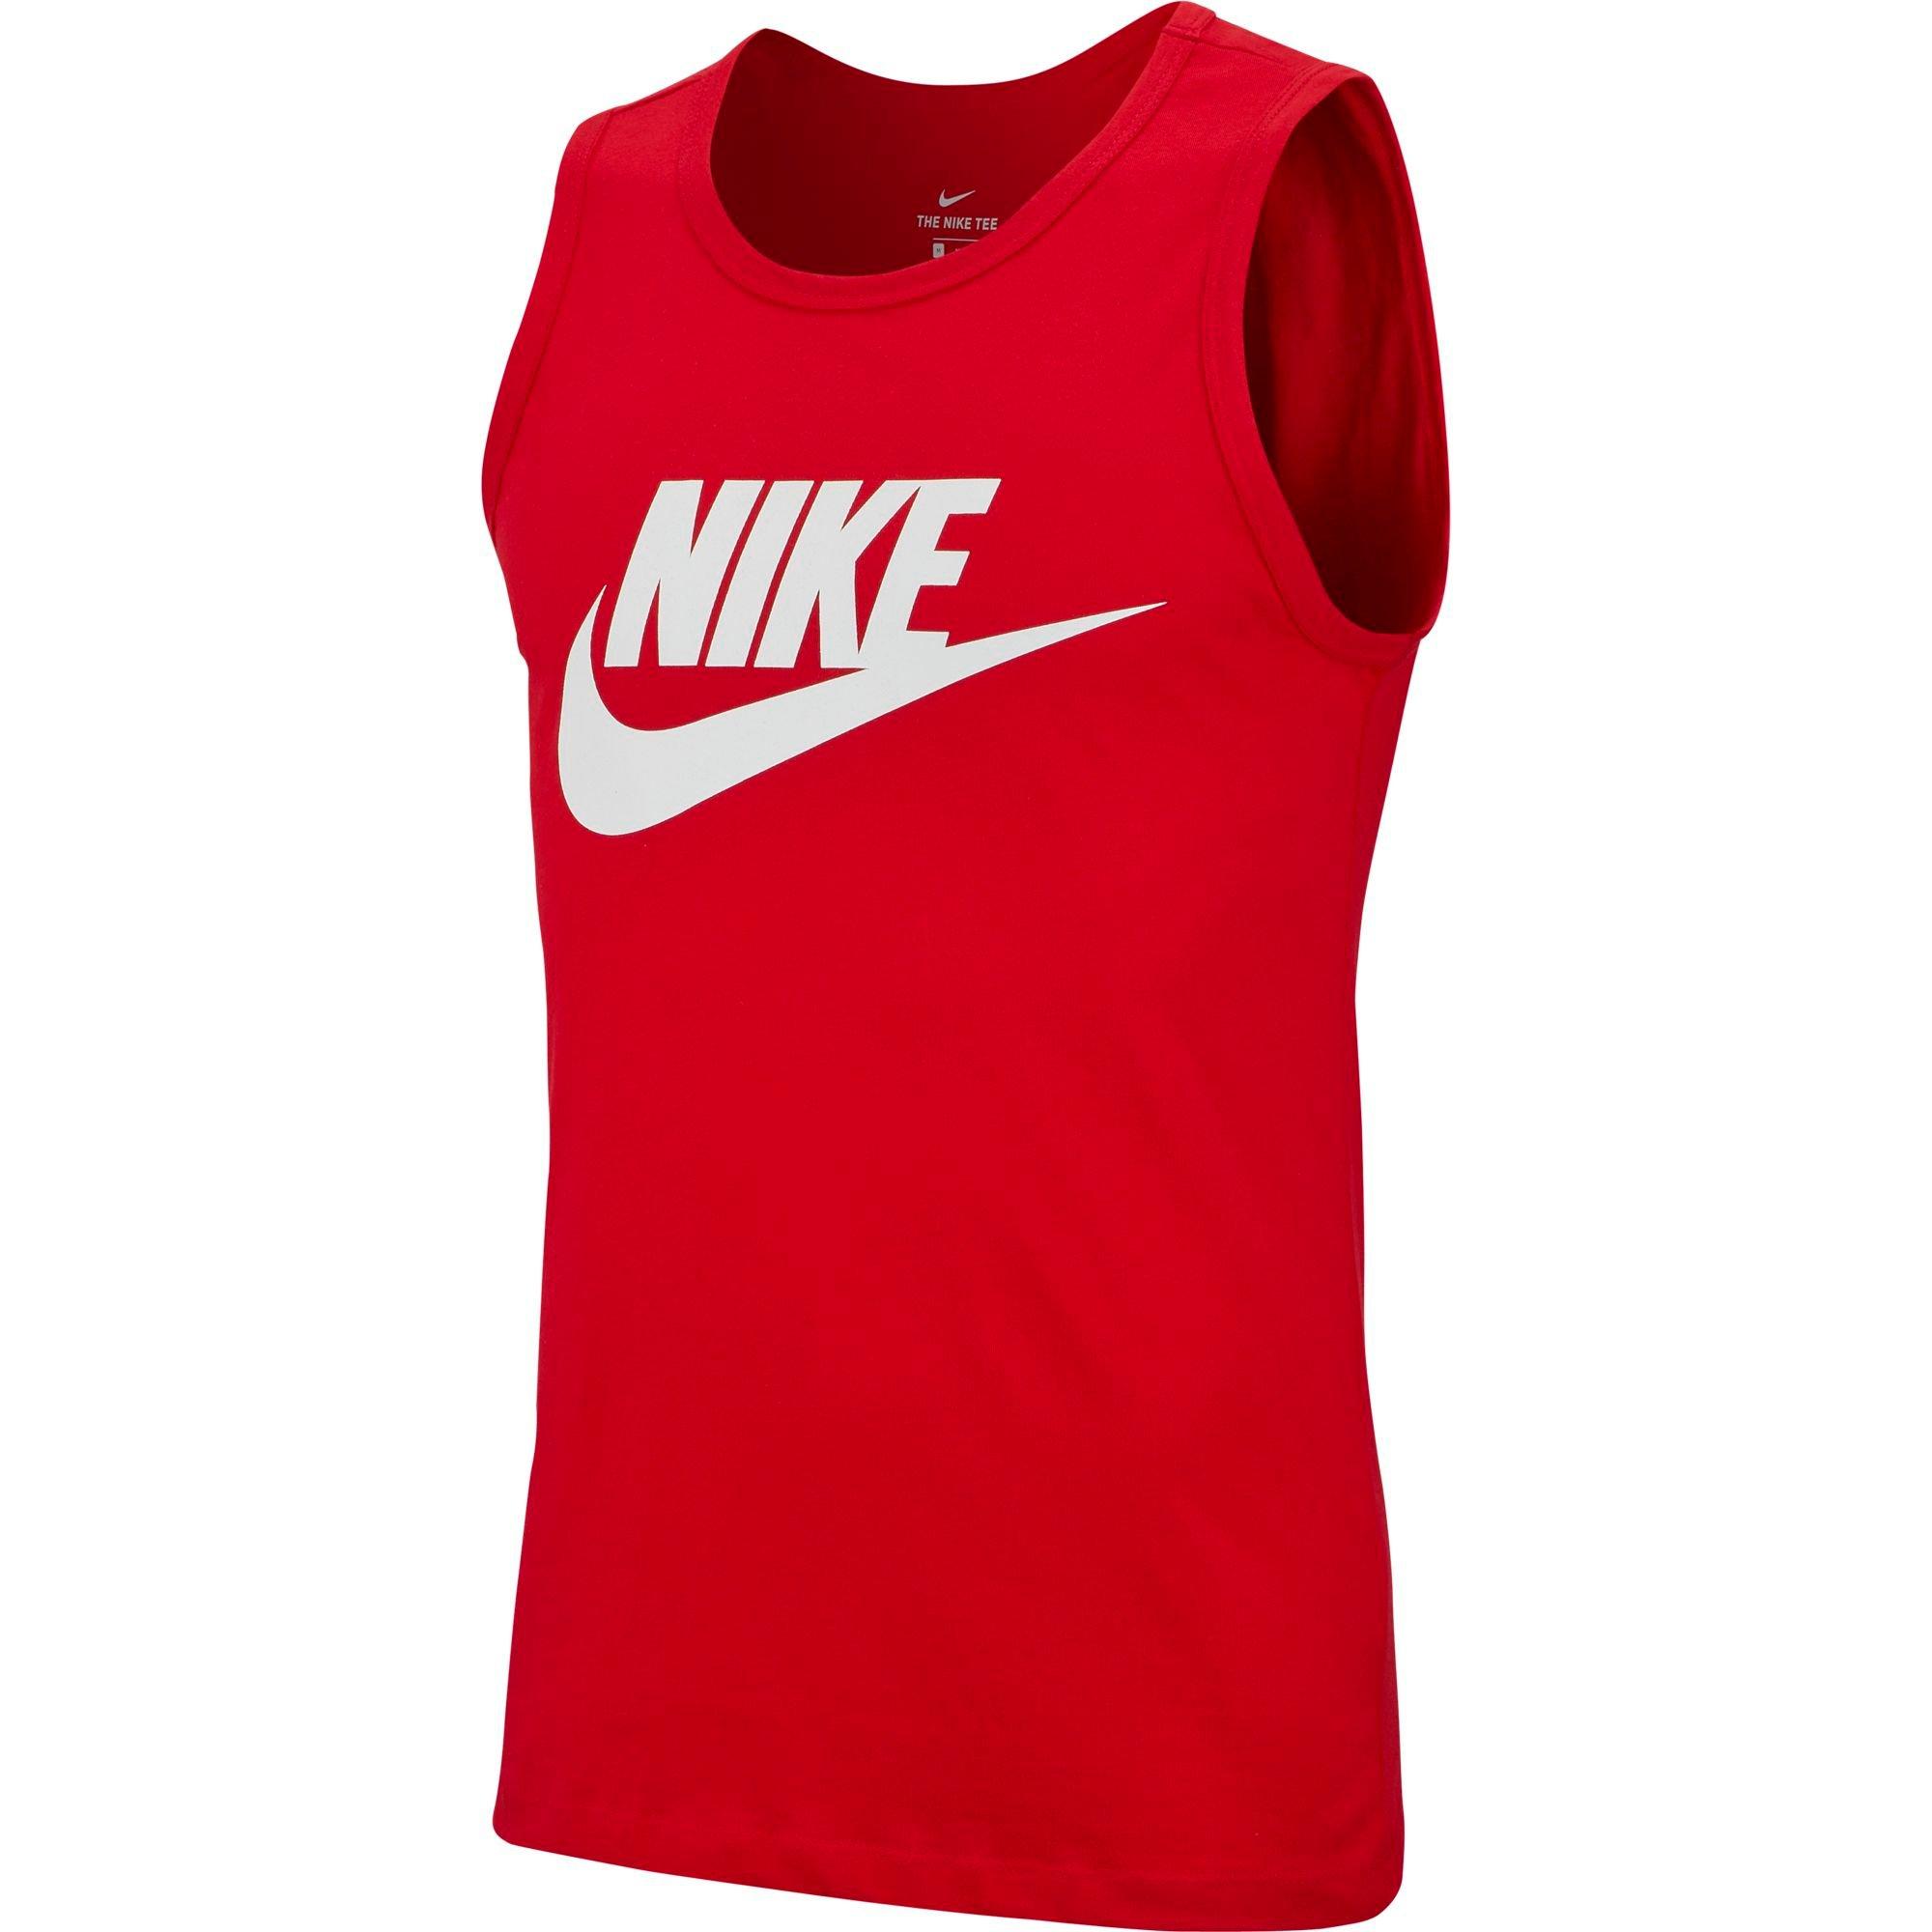 Материалы найк. Теннисная майка Nike. Футболка Nike красная. Футболка найк мужская красная. Футболку Nike Sportswear краснная.